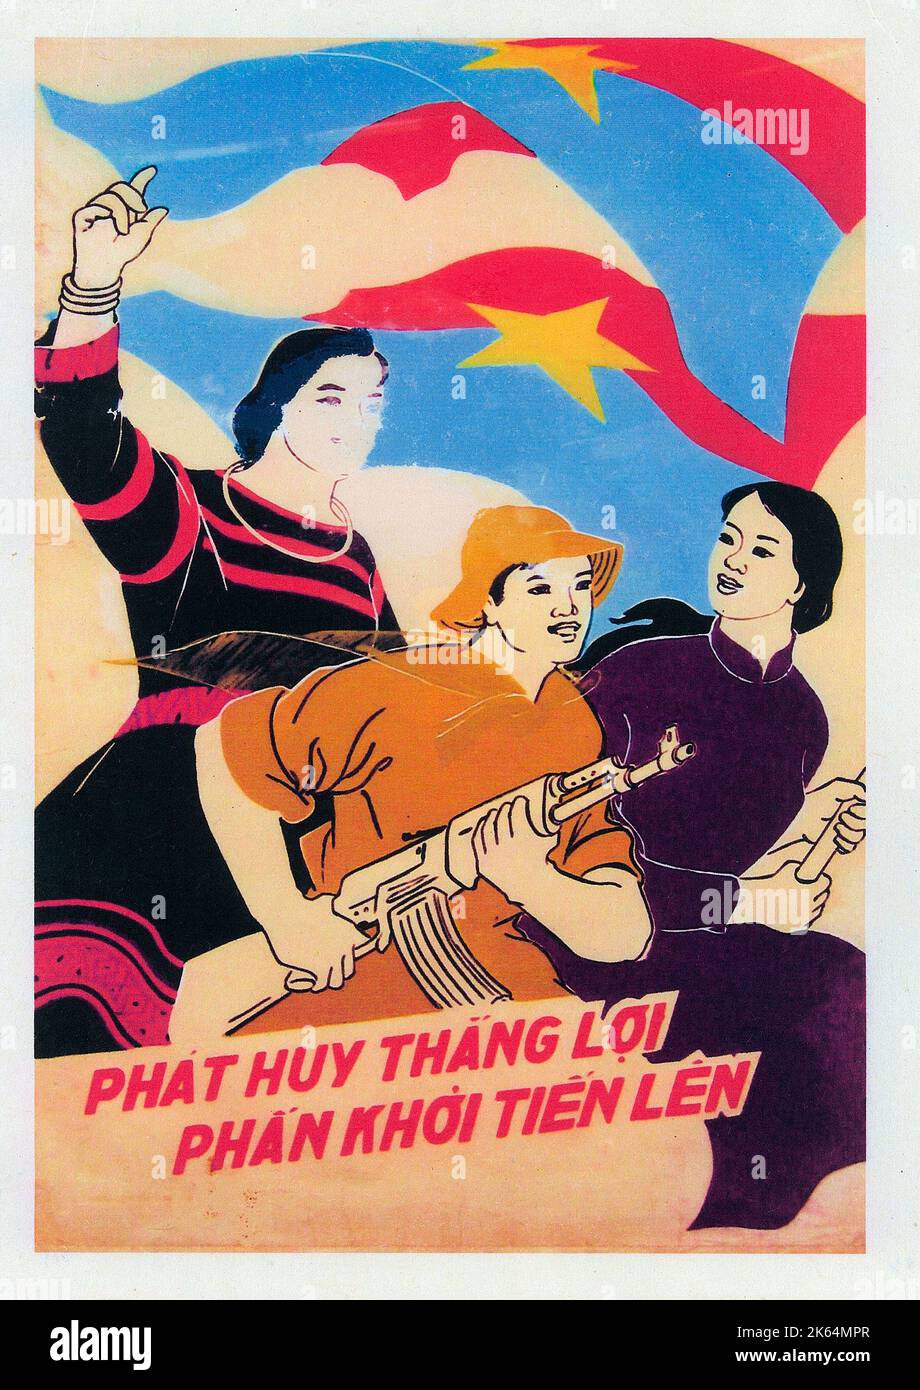 Vietnamese Patriotic Poster - 'Encourage Progress and Excitement' Stock Photo